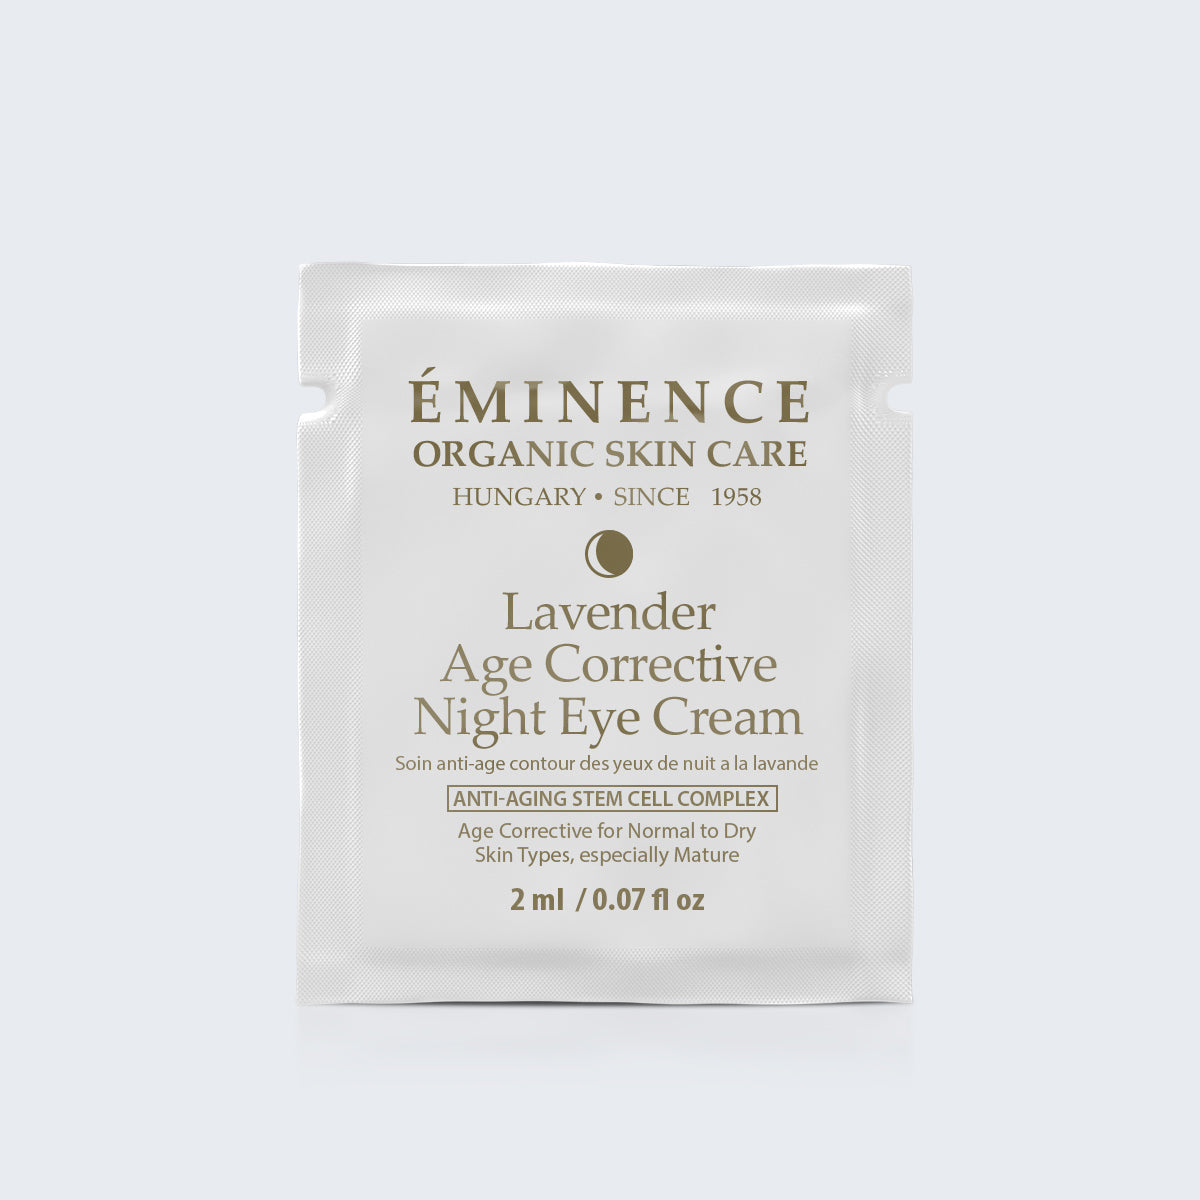 Eminence Organics Lavender Age Corrective Night Eye Cream Card Sample